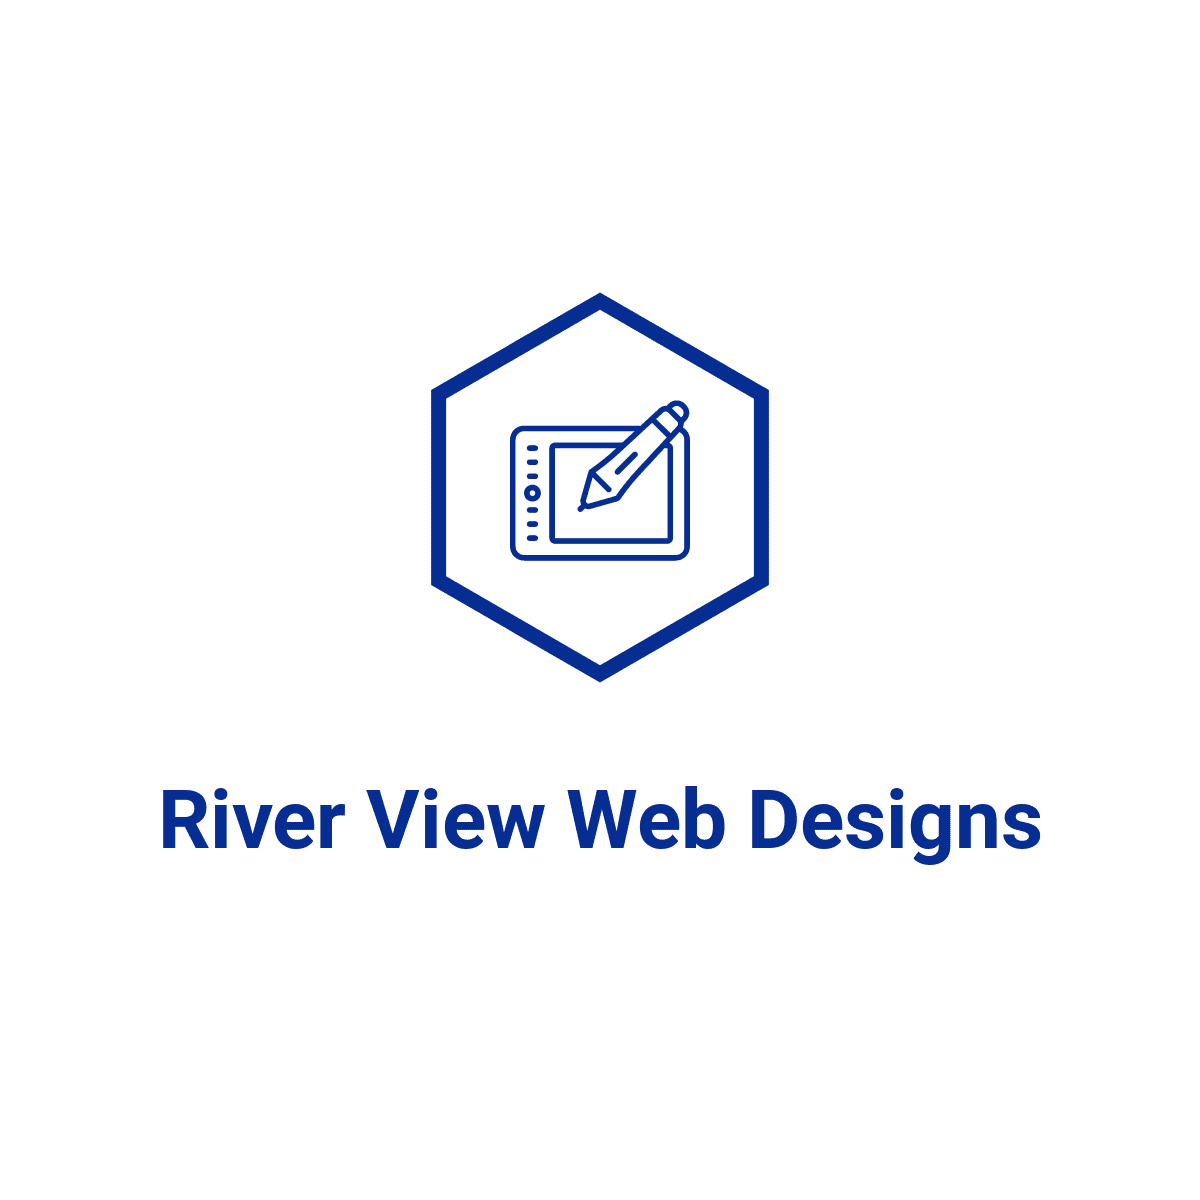 River View Web Designs